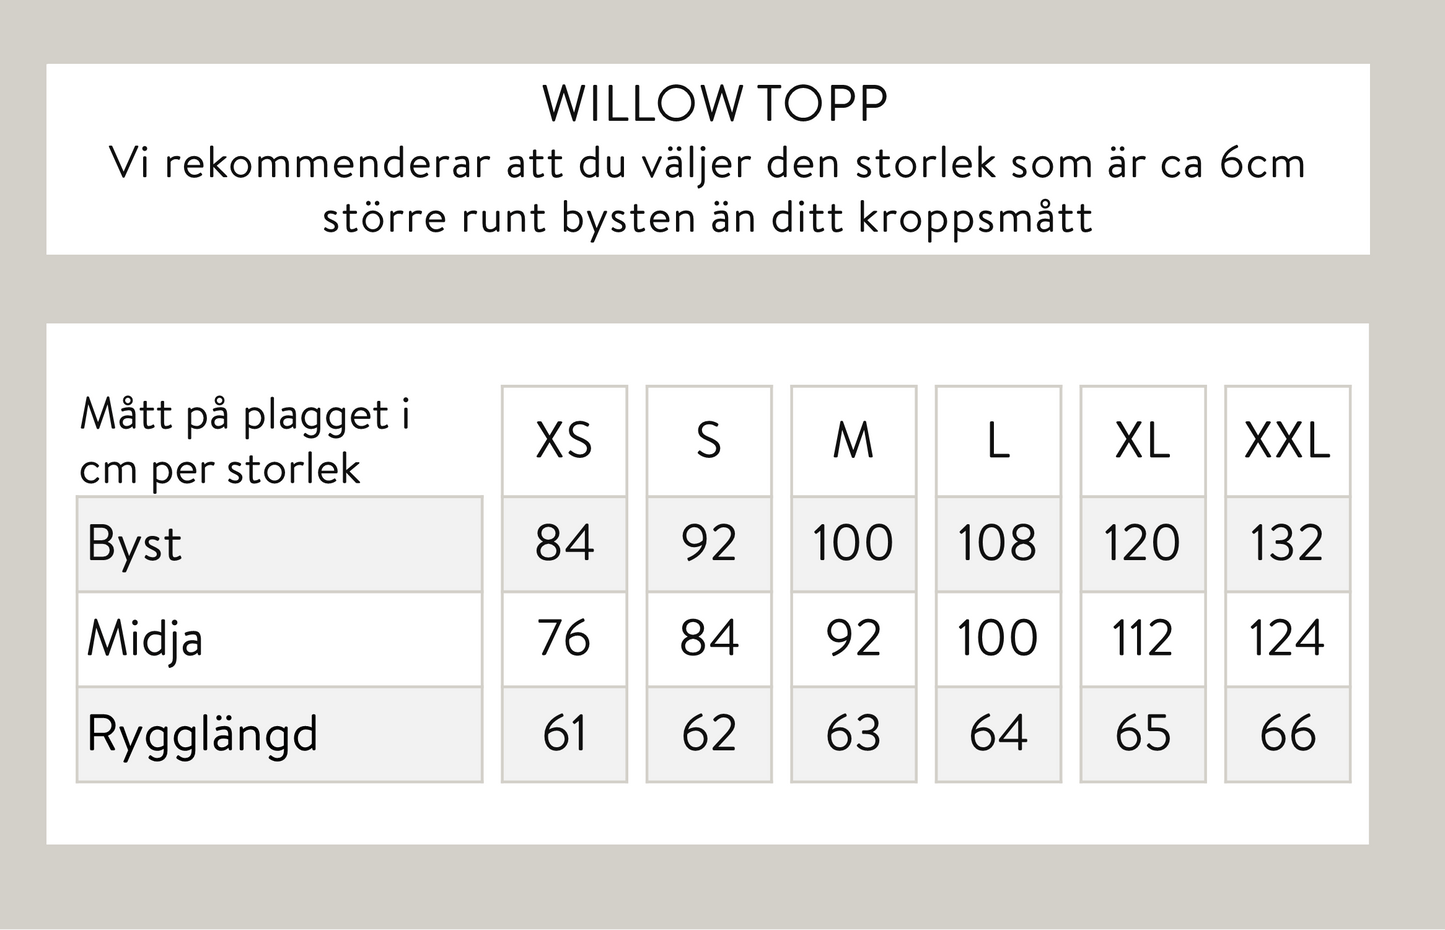 Willow topp - Offwhite